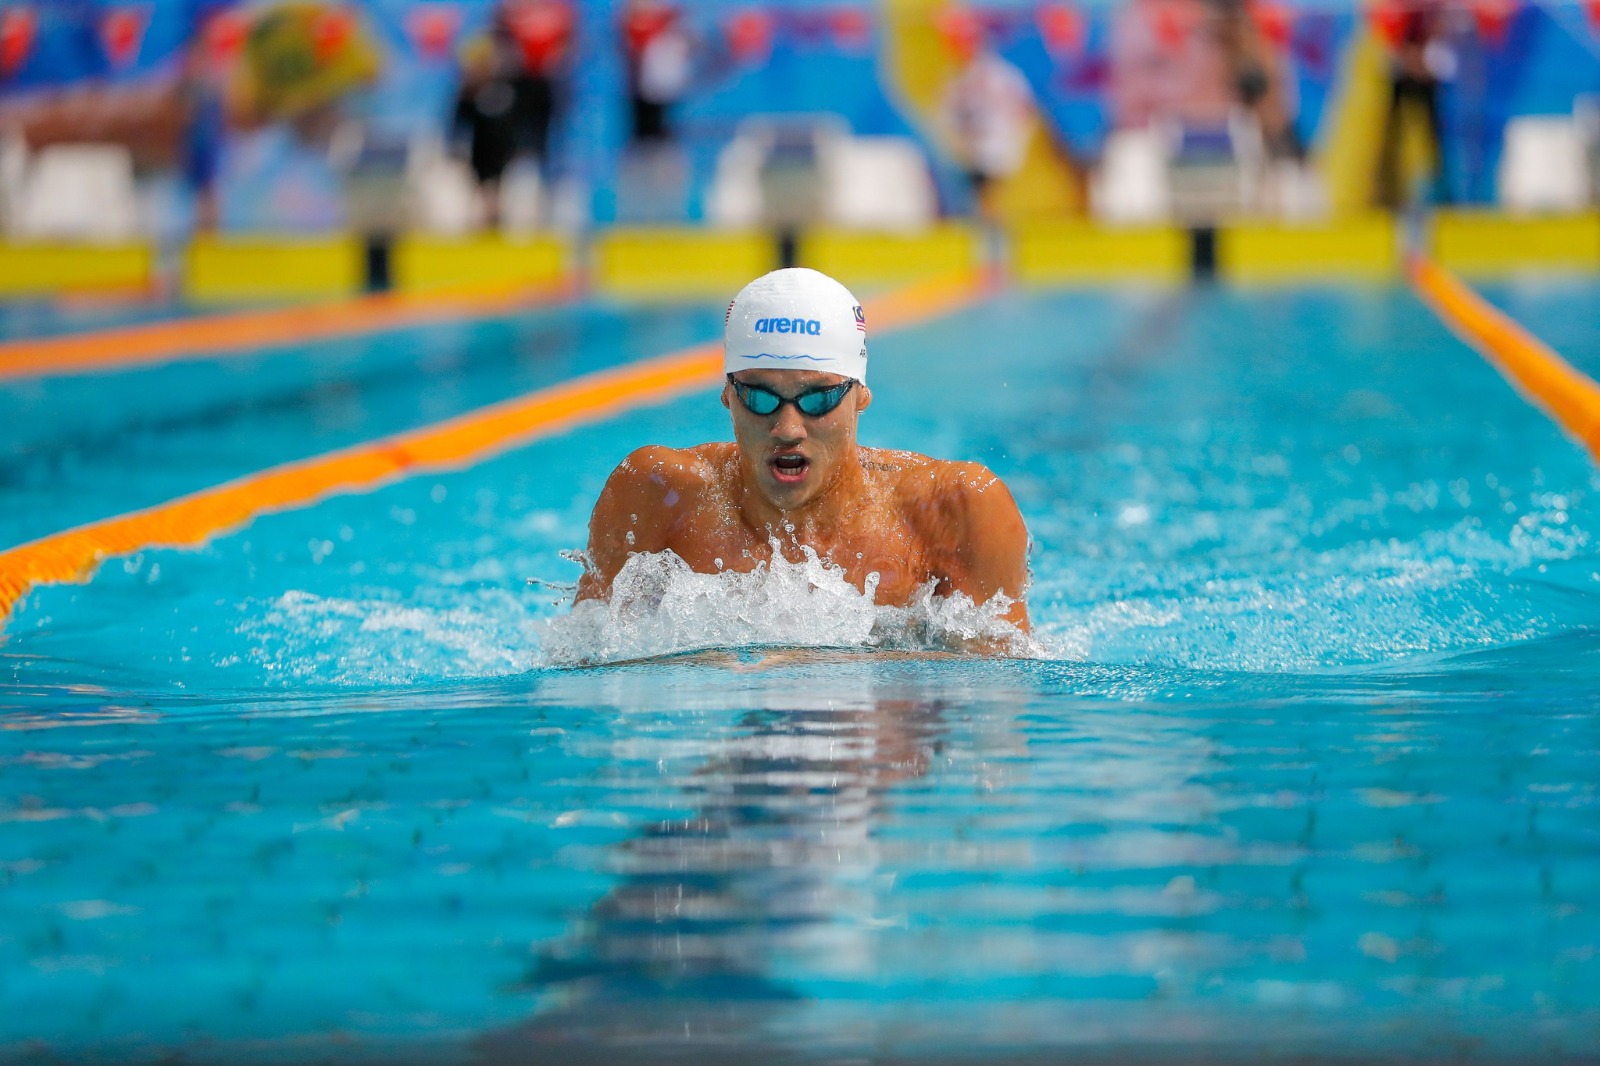 Arvin faces tough odds for Paris despite Malaysia Open swimming record